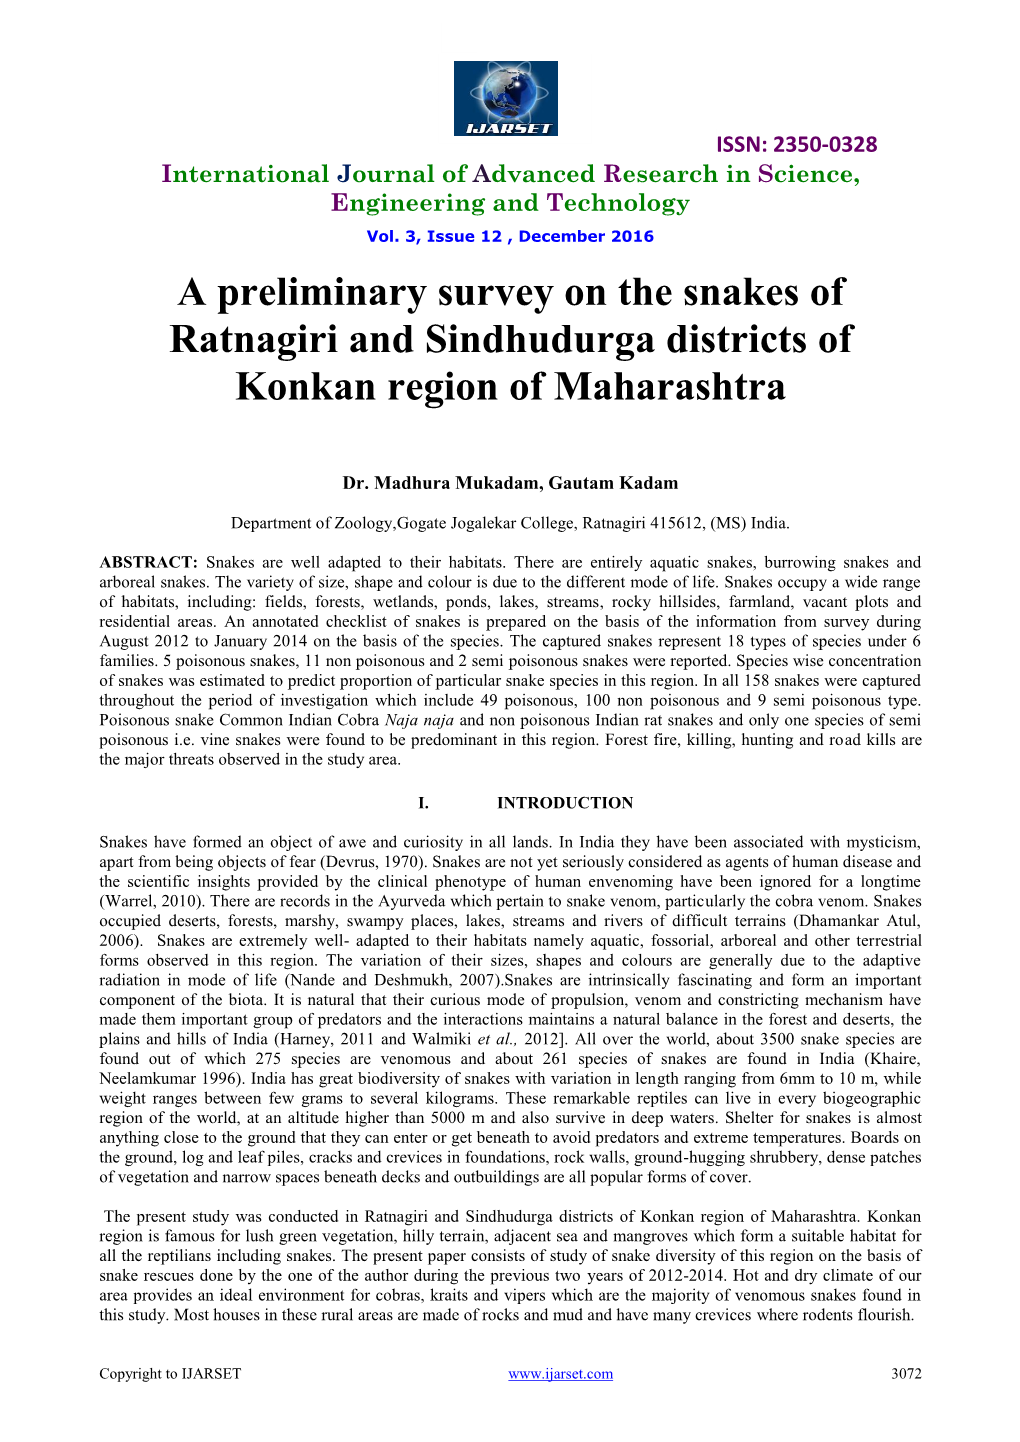 A Preliminary Survey on the Snakes of Ratnagiri and Sindhudurga Districts of Konkan Region of Maharashtra